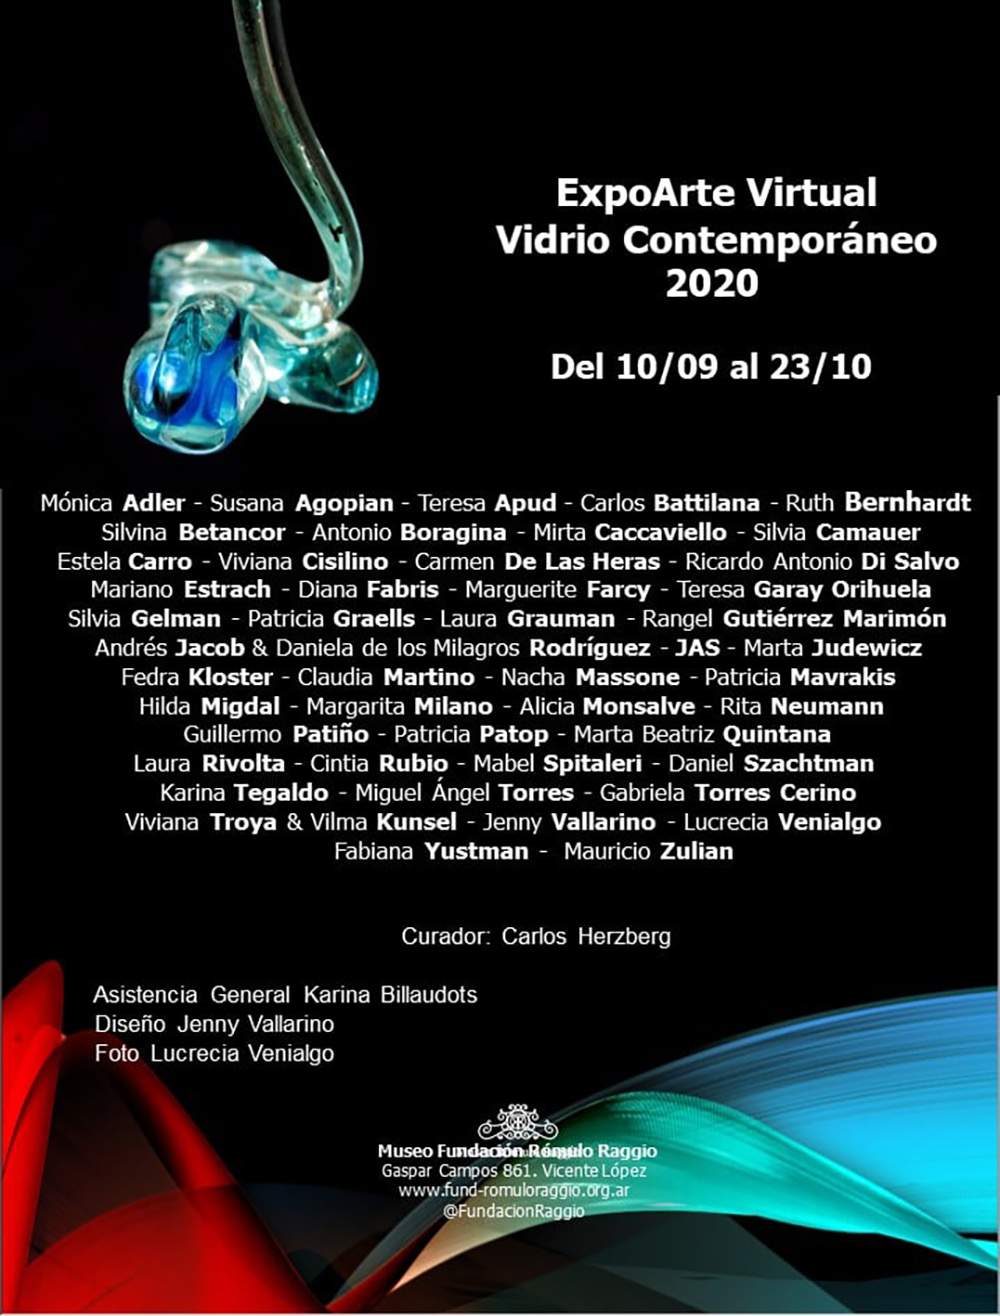 ExpoArte Virtual Vidrio Contemporáneo 2020